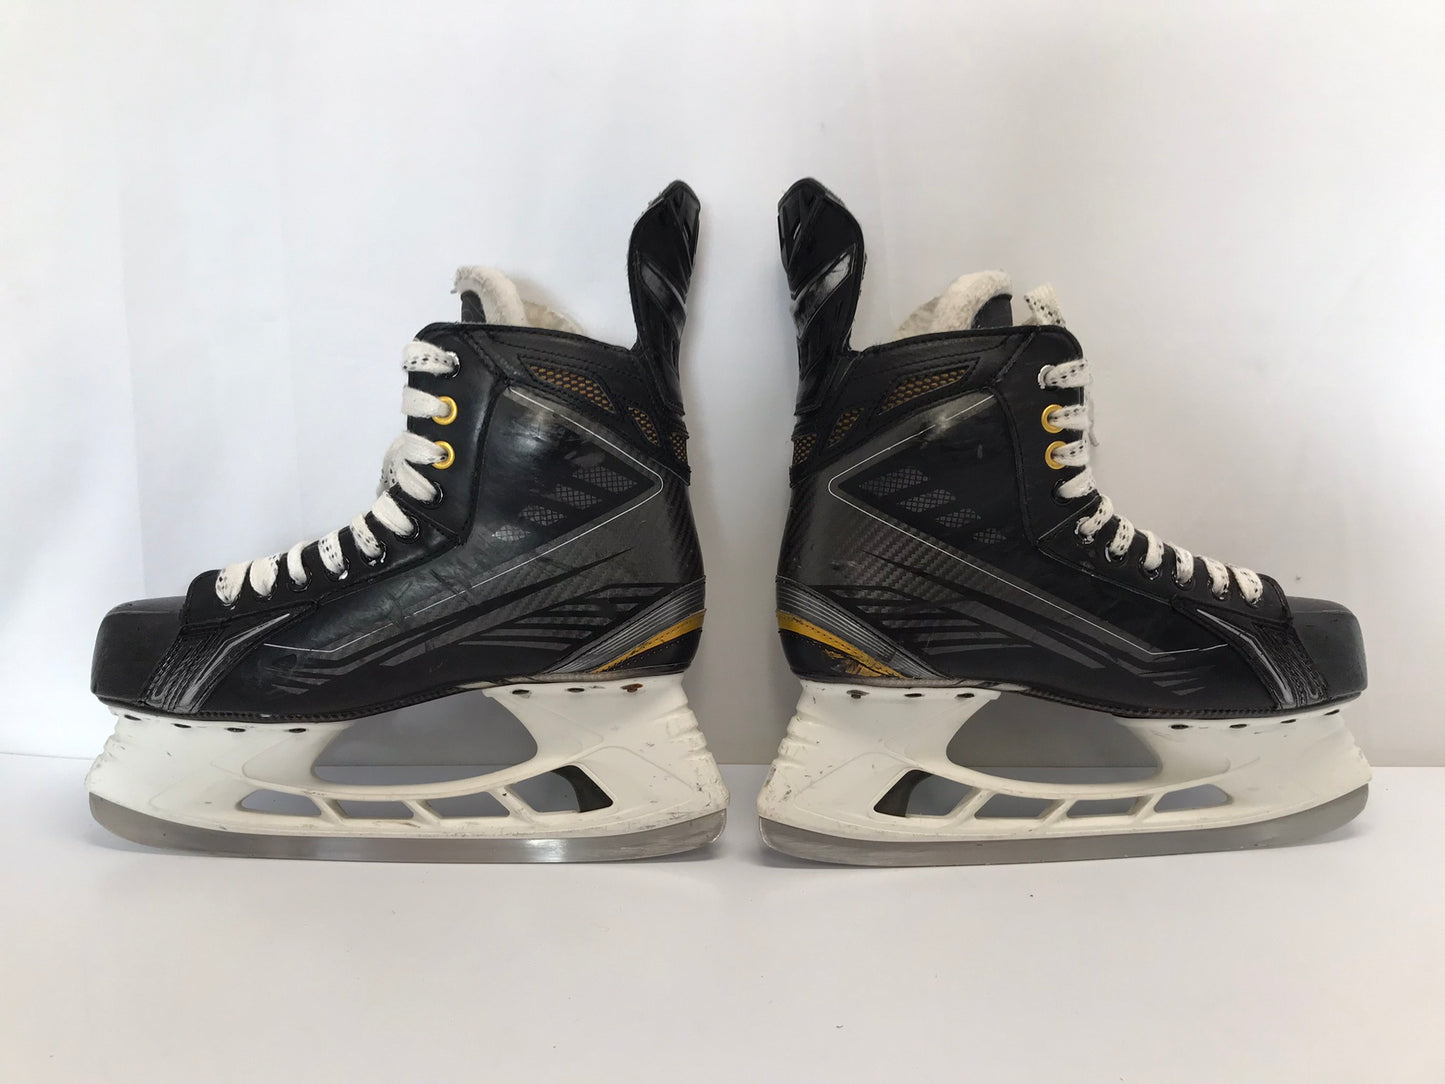 Hockey Skates Men's Size 9.5 Shoe Size  Bauer Supreme 160  Minor Wear